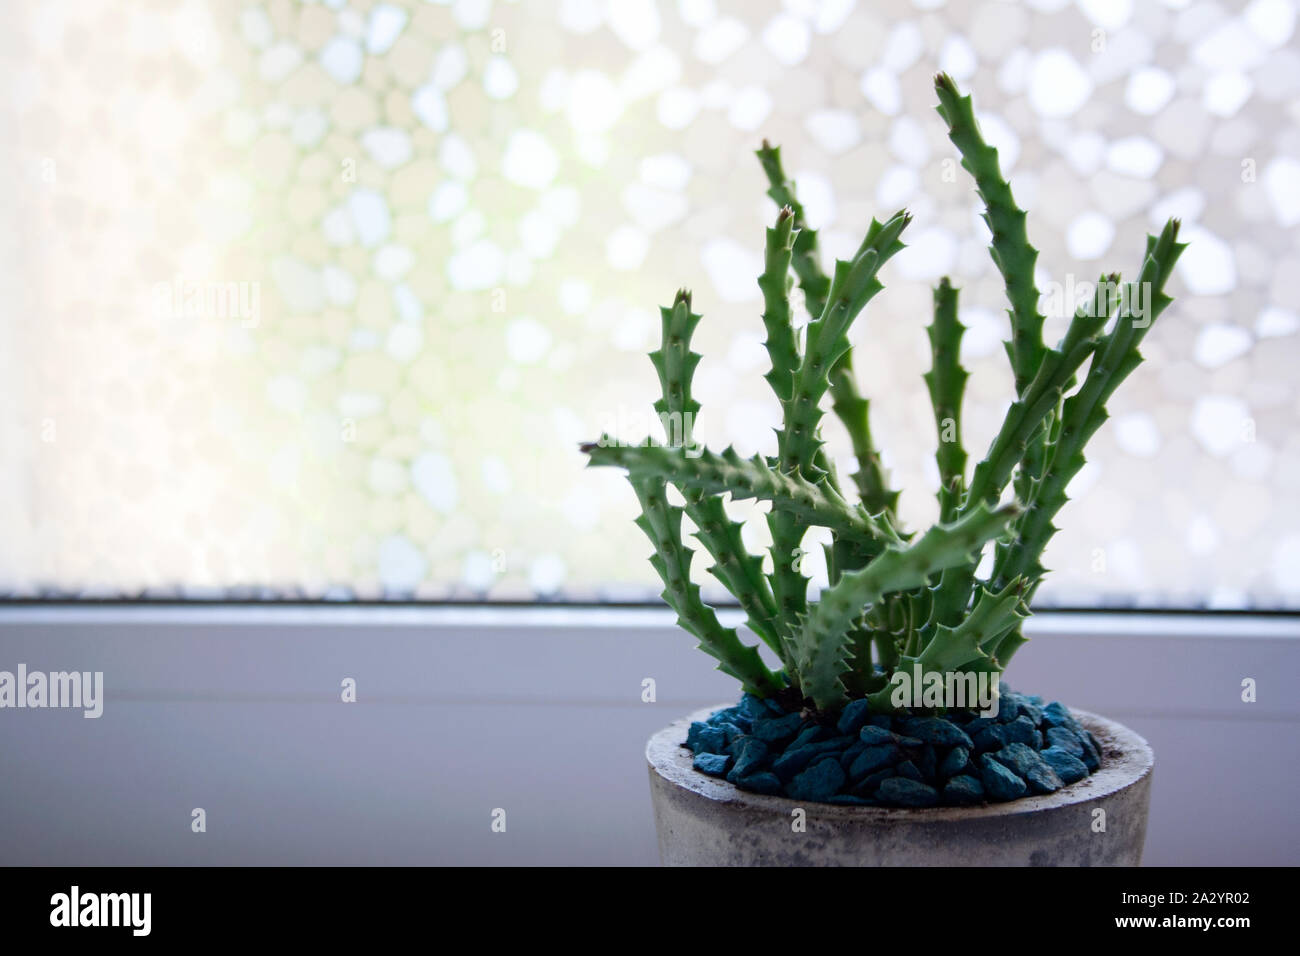 Huernia succulent plant in concrete pot with blue stones near window Stock Photo